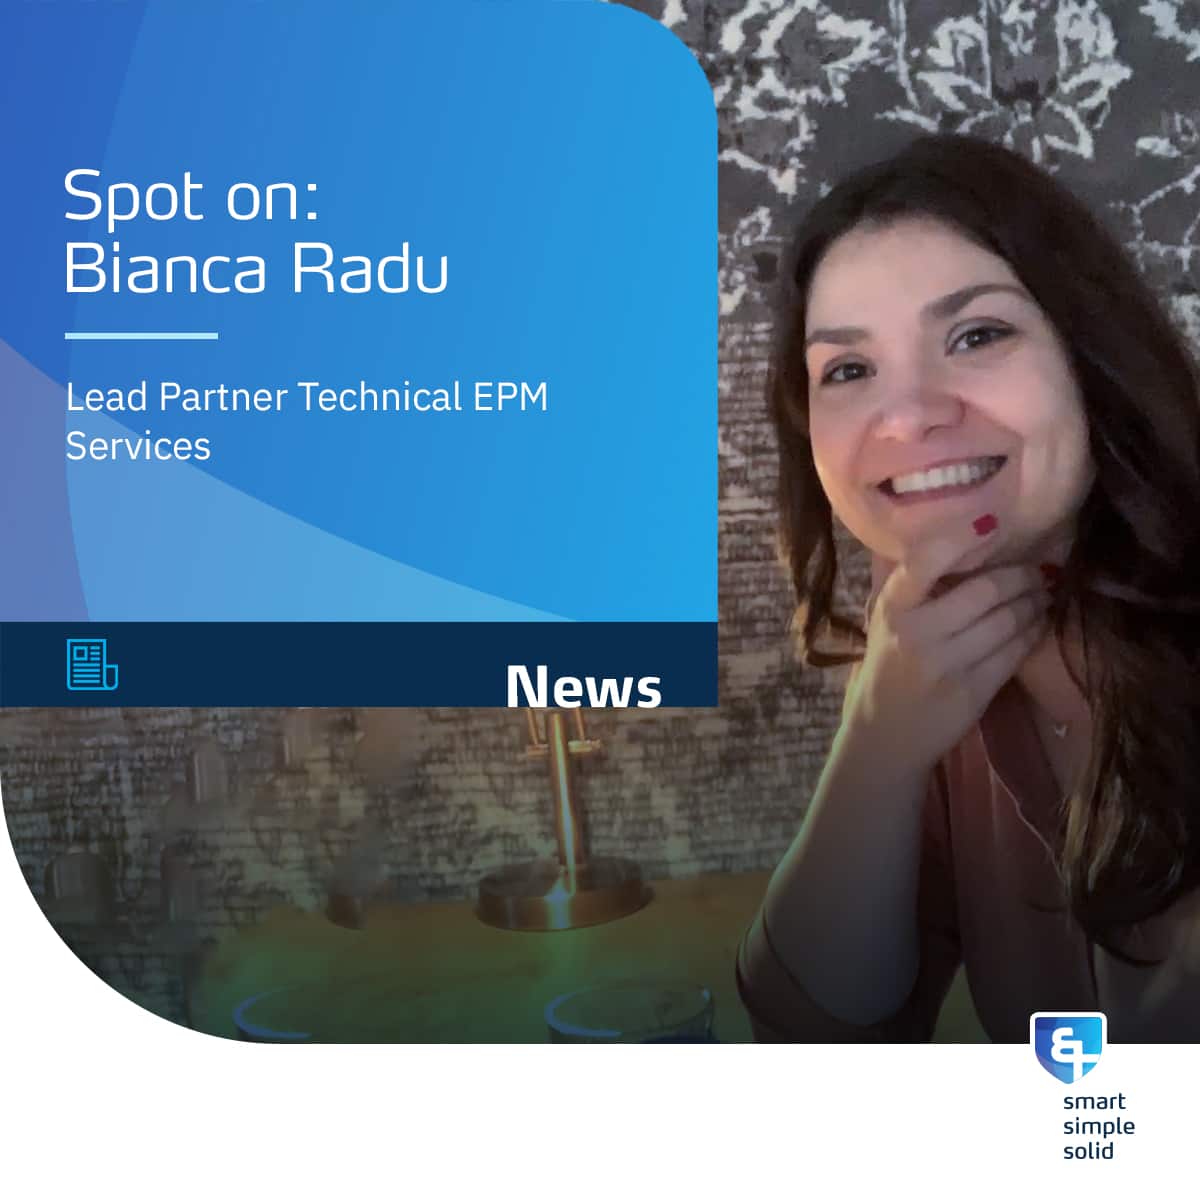 Spot on - Bianca Radu - Lead Partner Technical EPM Services